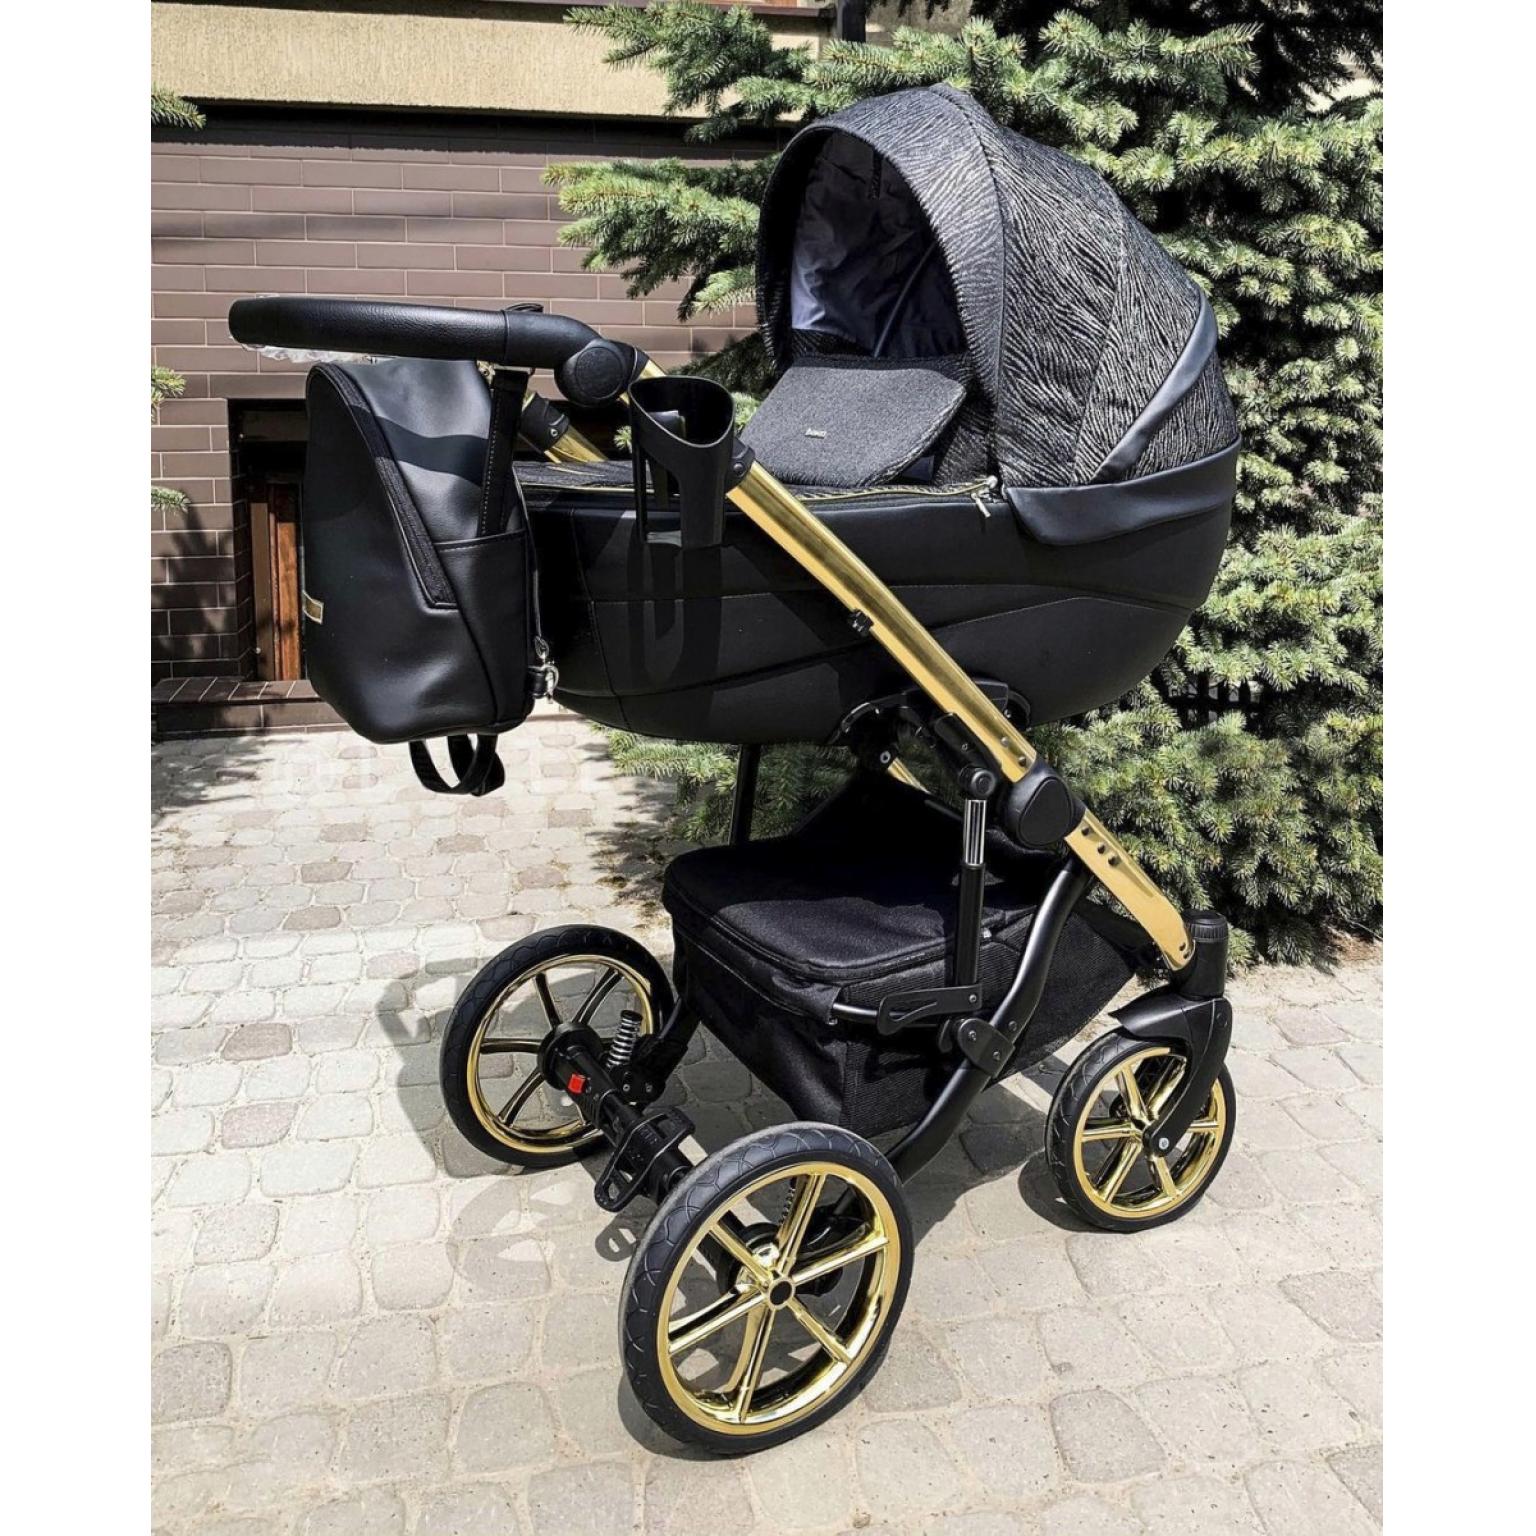 melni-Bērnu-rati-2in1-3in1-BEXA-IDEAL-2020-ID-02-Gold-Black-детская-коляска-ratinuparzdize (124)